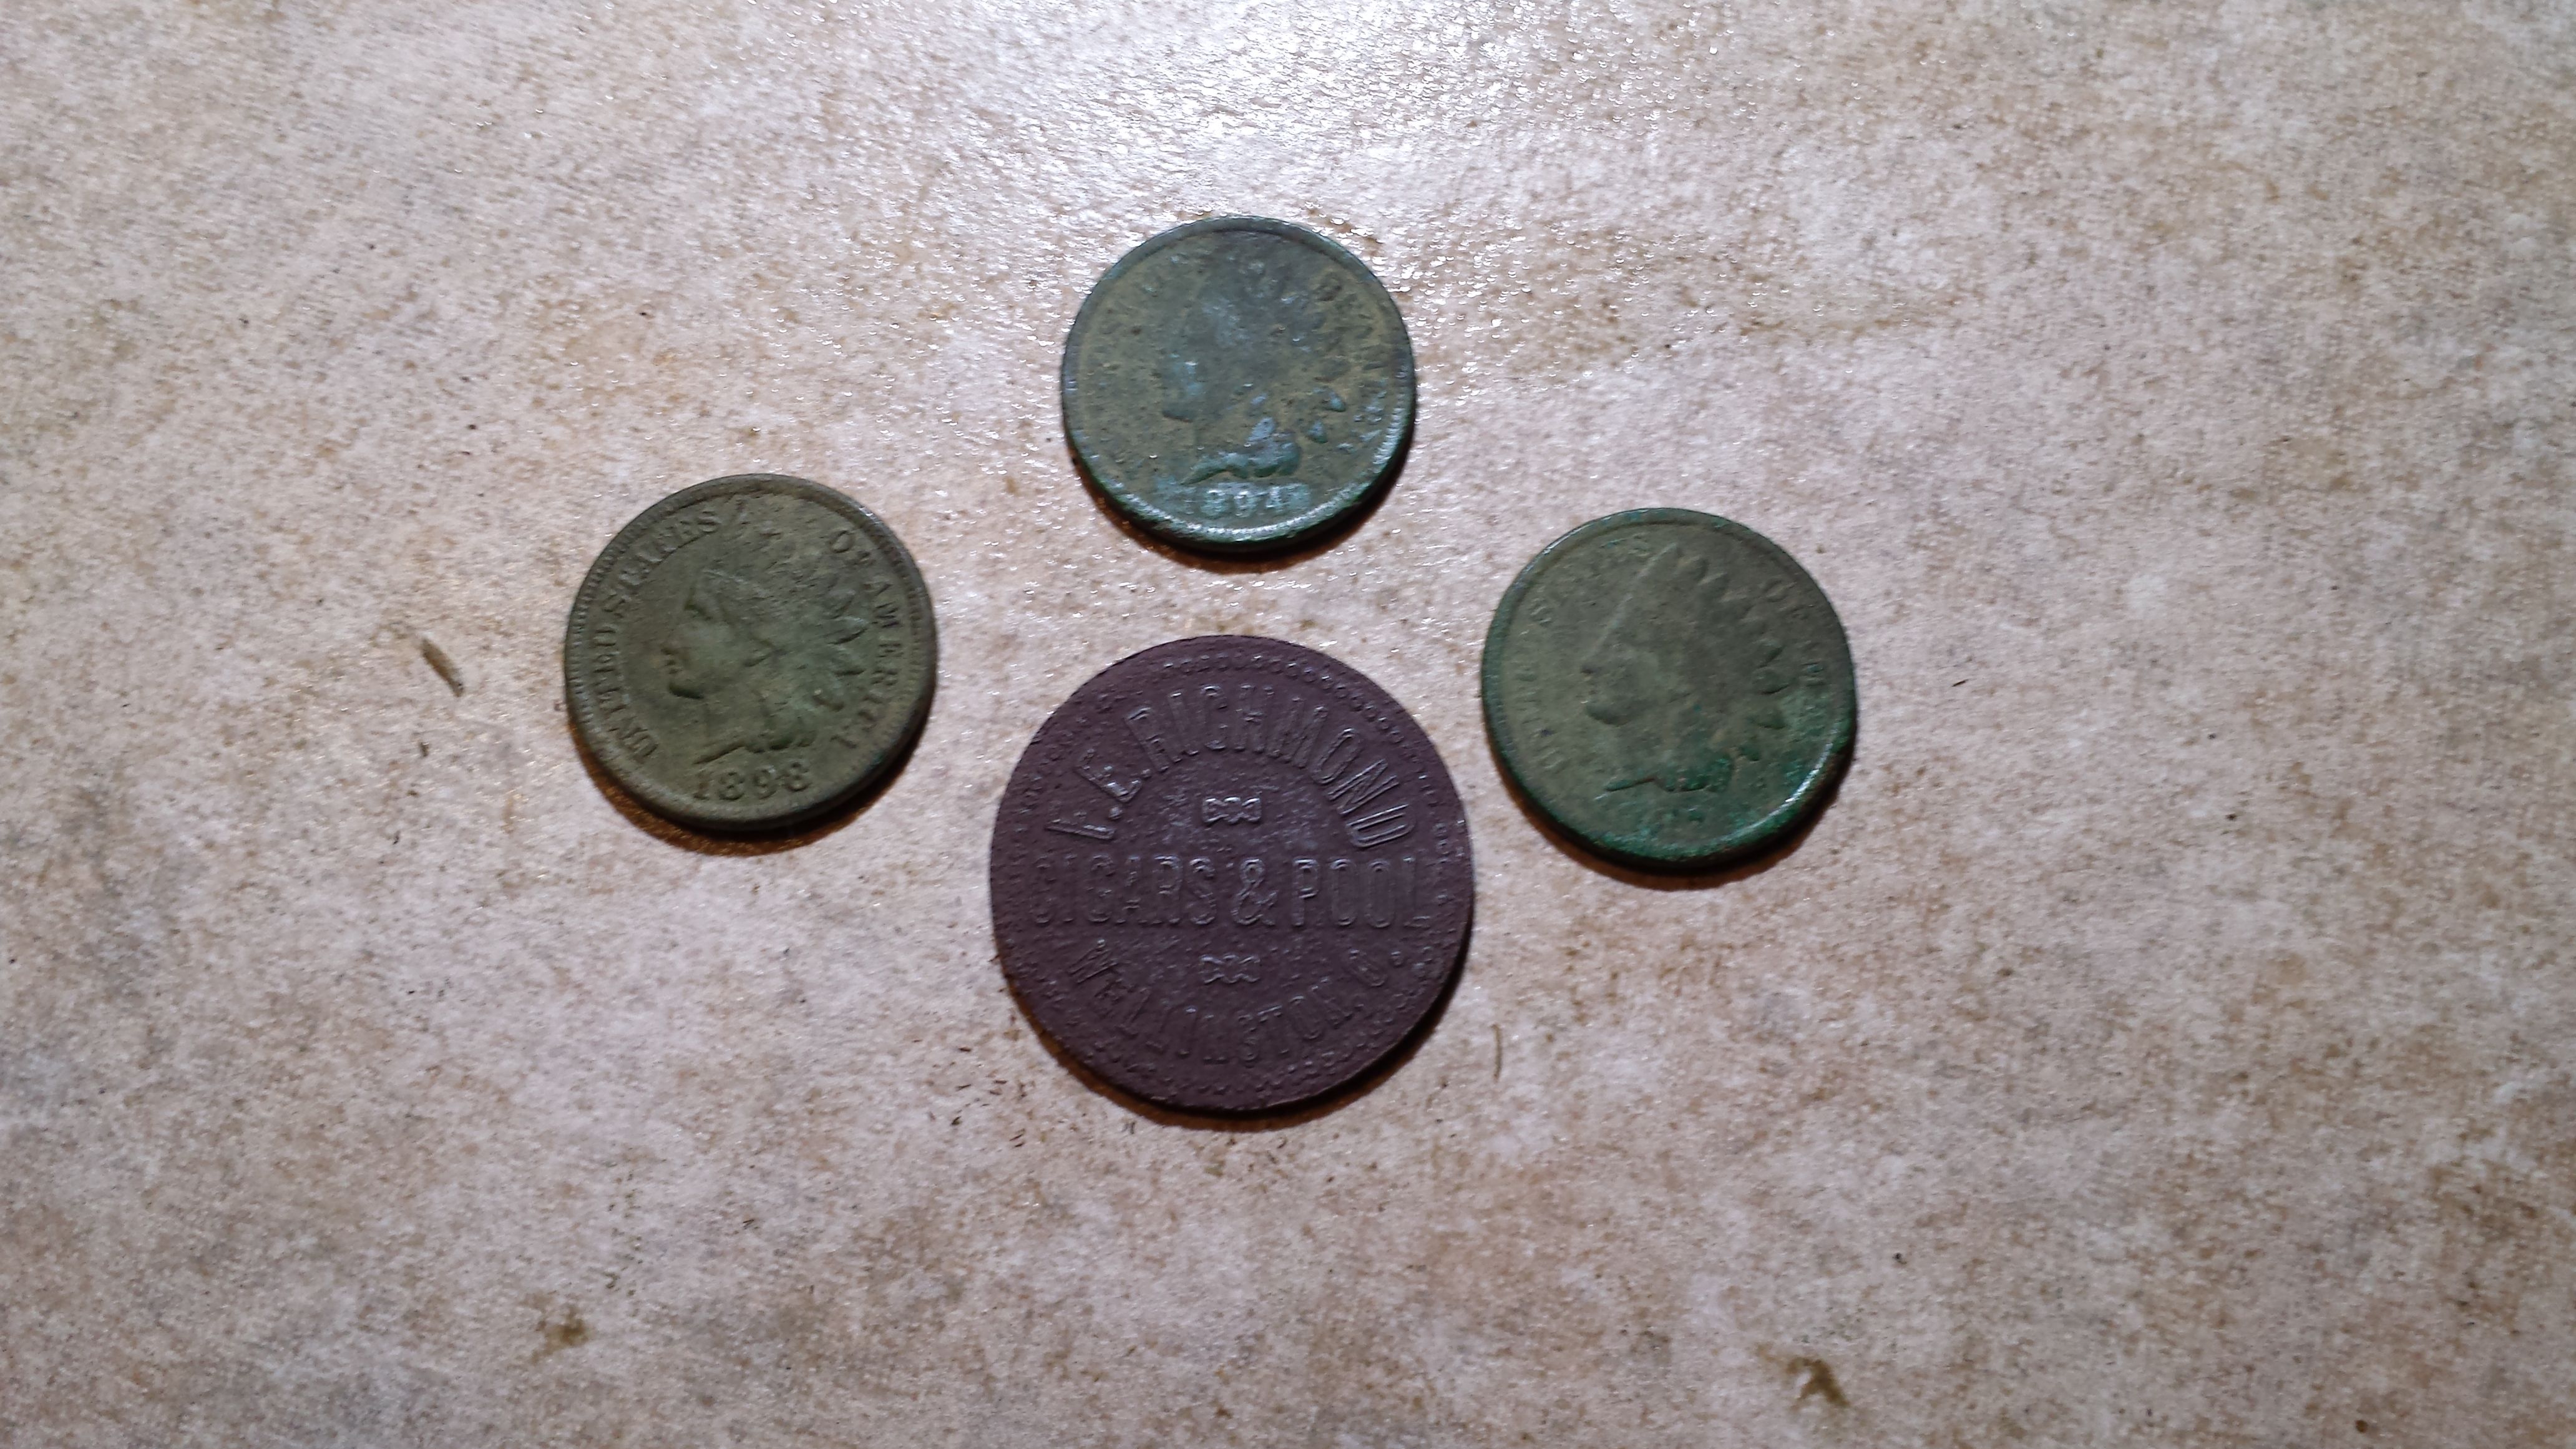 20151120 190710  Shawn's House Notables, 3 IHPs (1887,94, & 98), 1 5 cent trade token F.E. RICHMOND. CIGARS & POOL, WELLINGTON